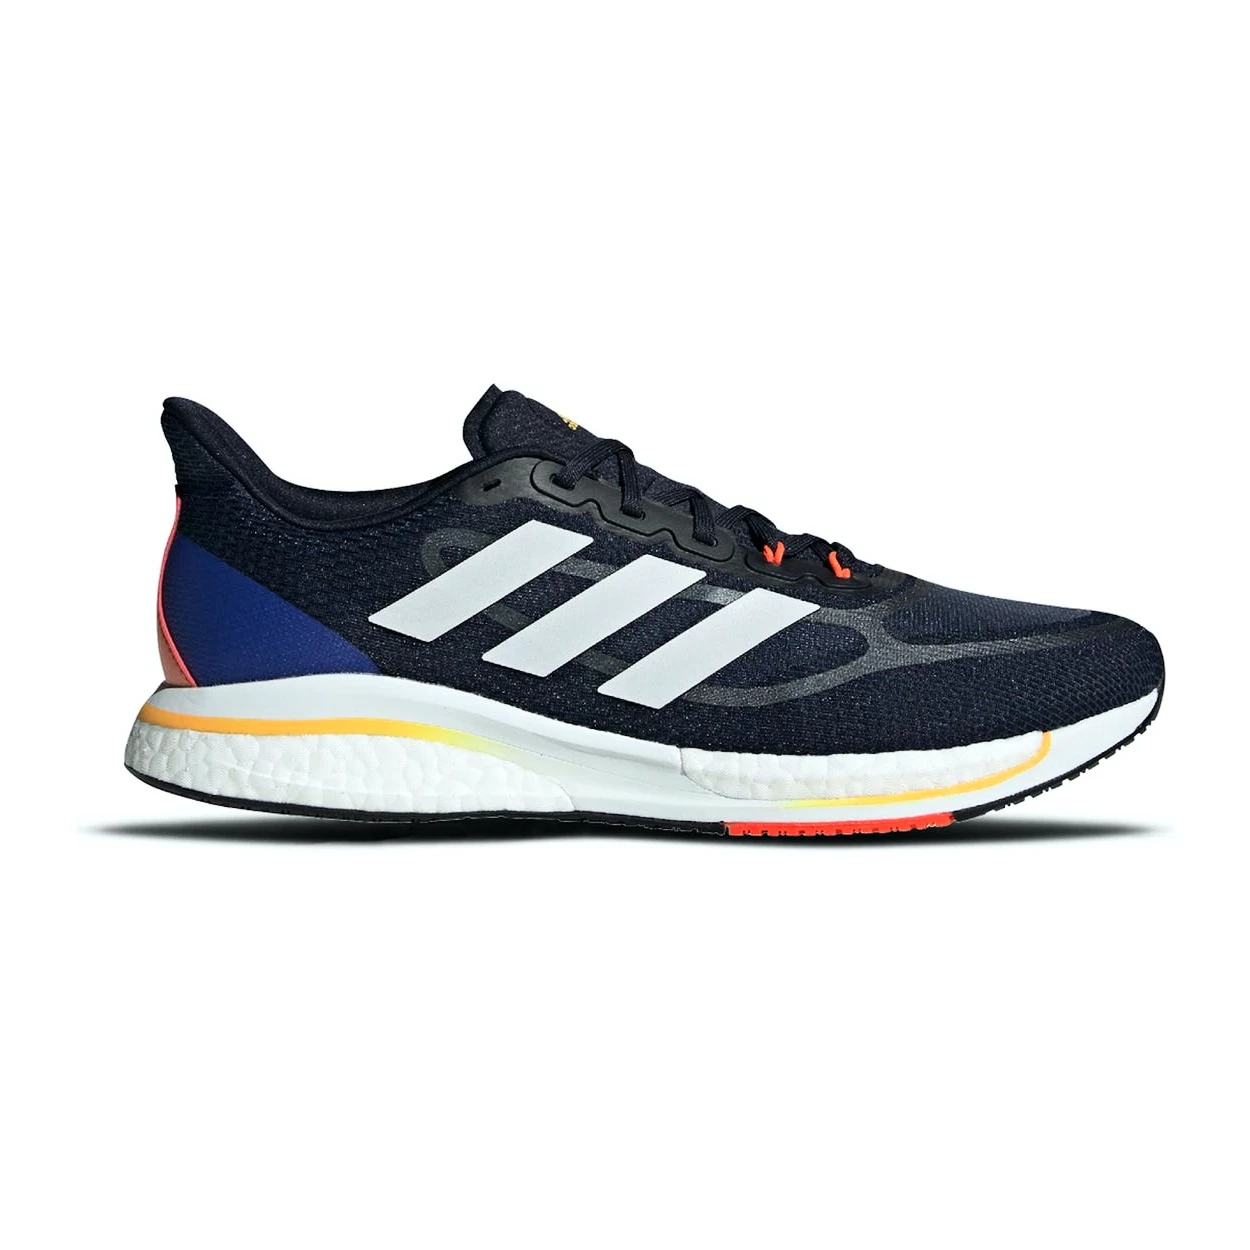 Men's running shoes adidas Supernova + Legend Ink im Sale-Adidas 1